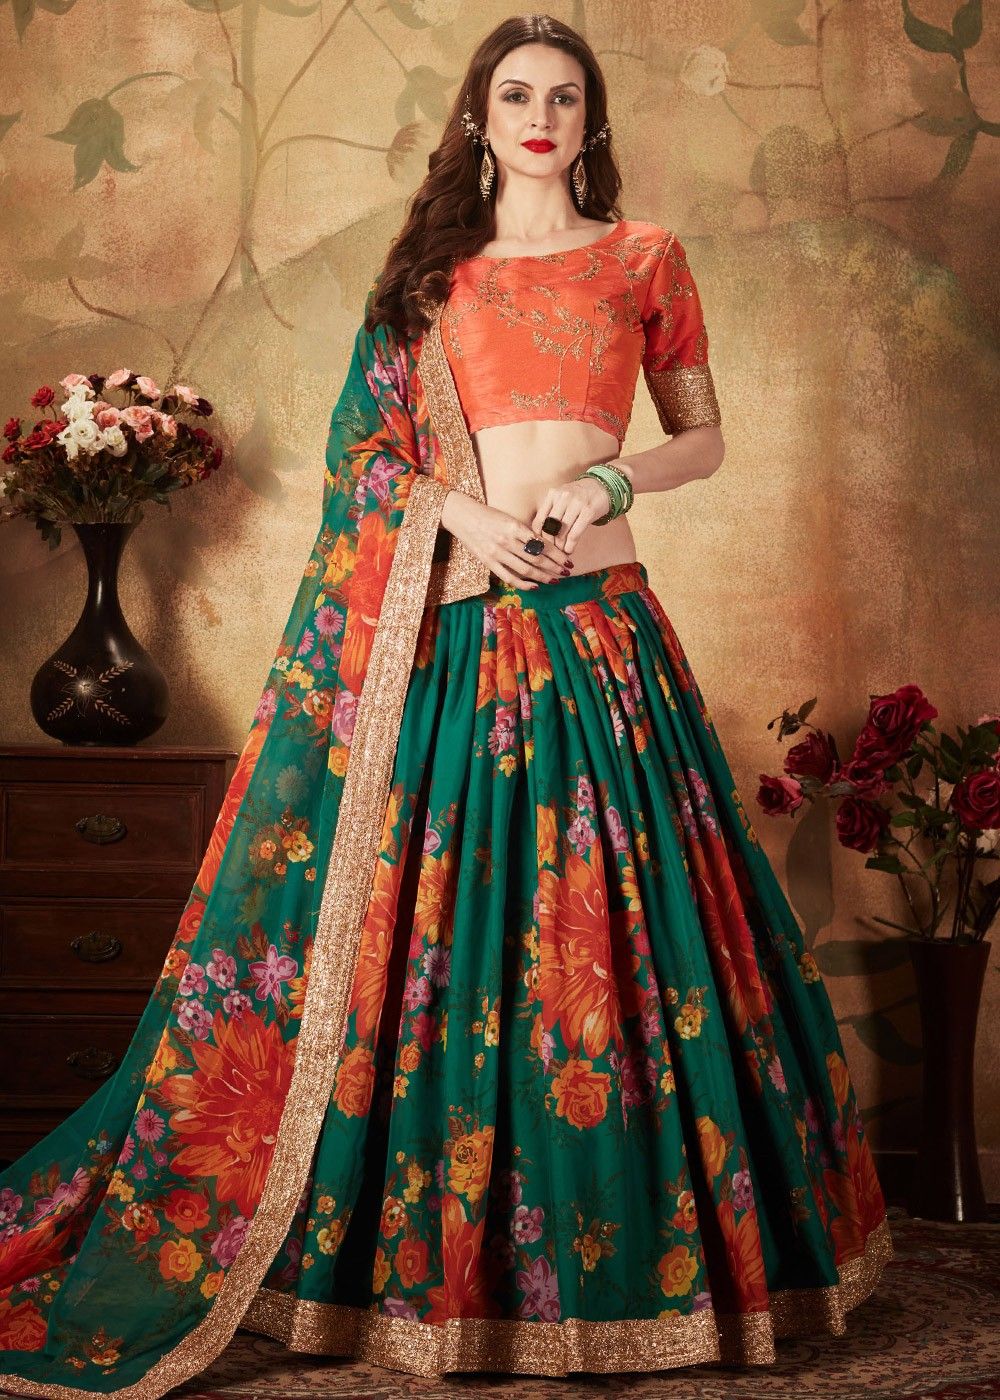 designer wedding Orange Banarasi Lehenga Choli Digital Print Work And Net Four Size Print Border Dupatta For Women Lehengas.indian dresses